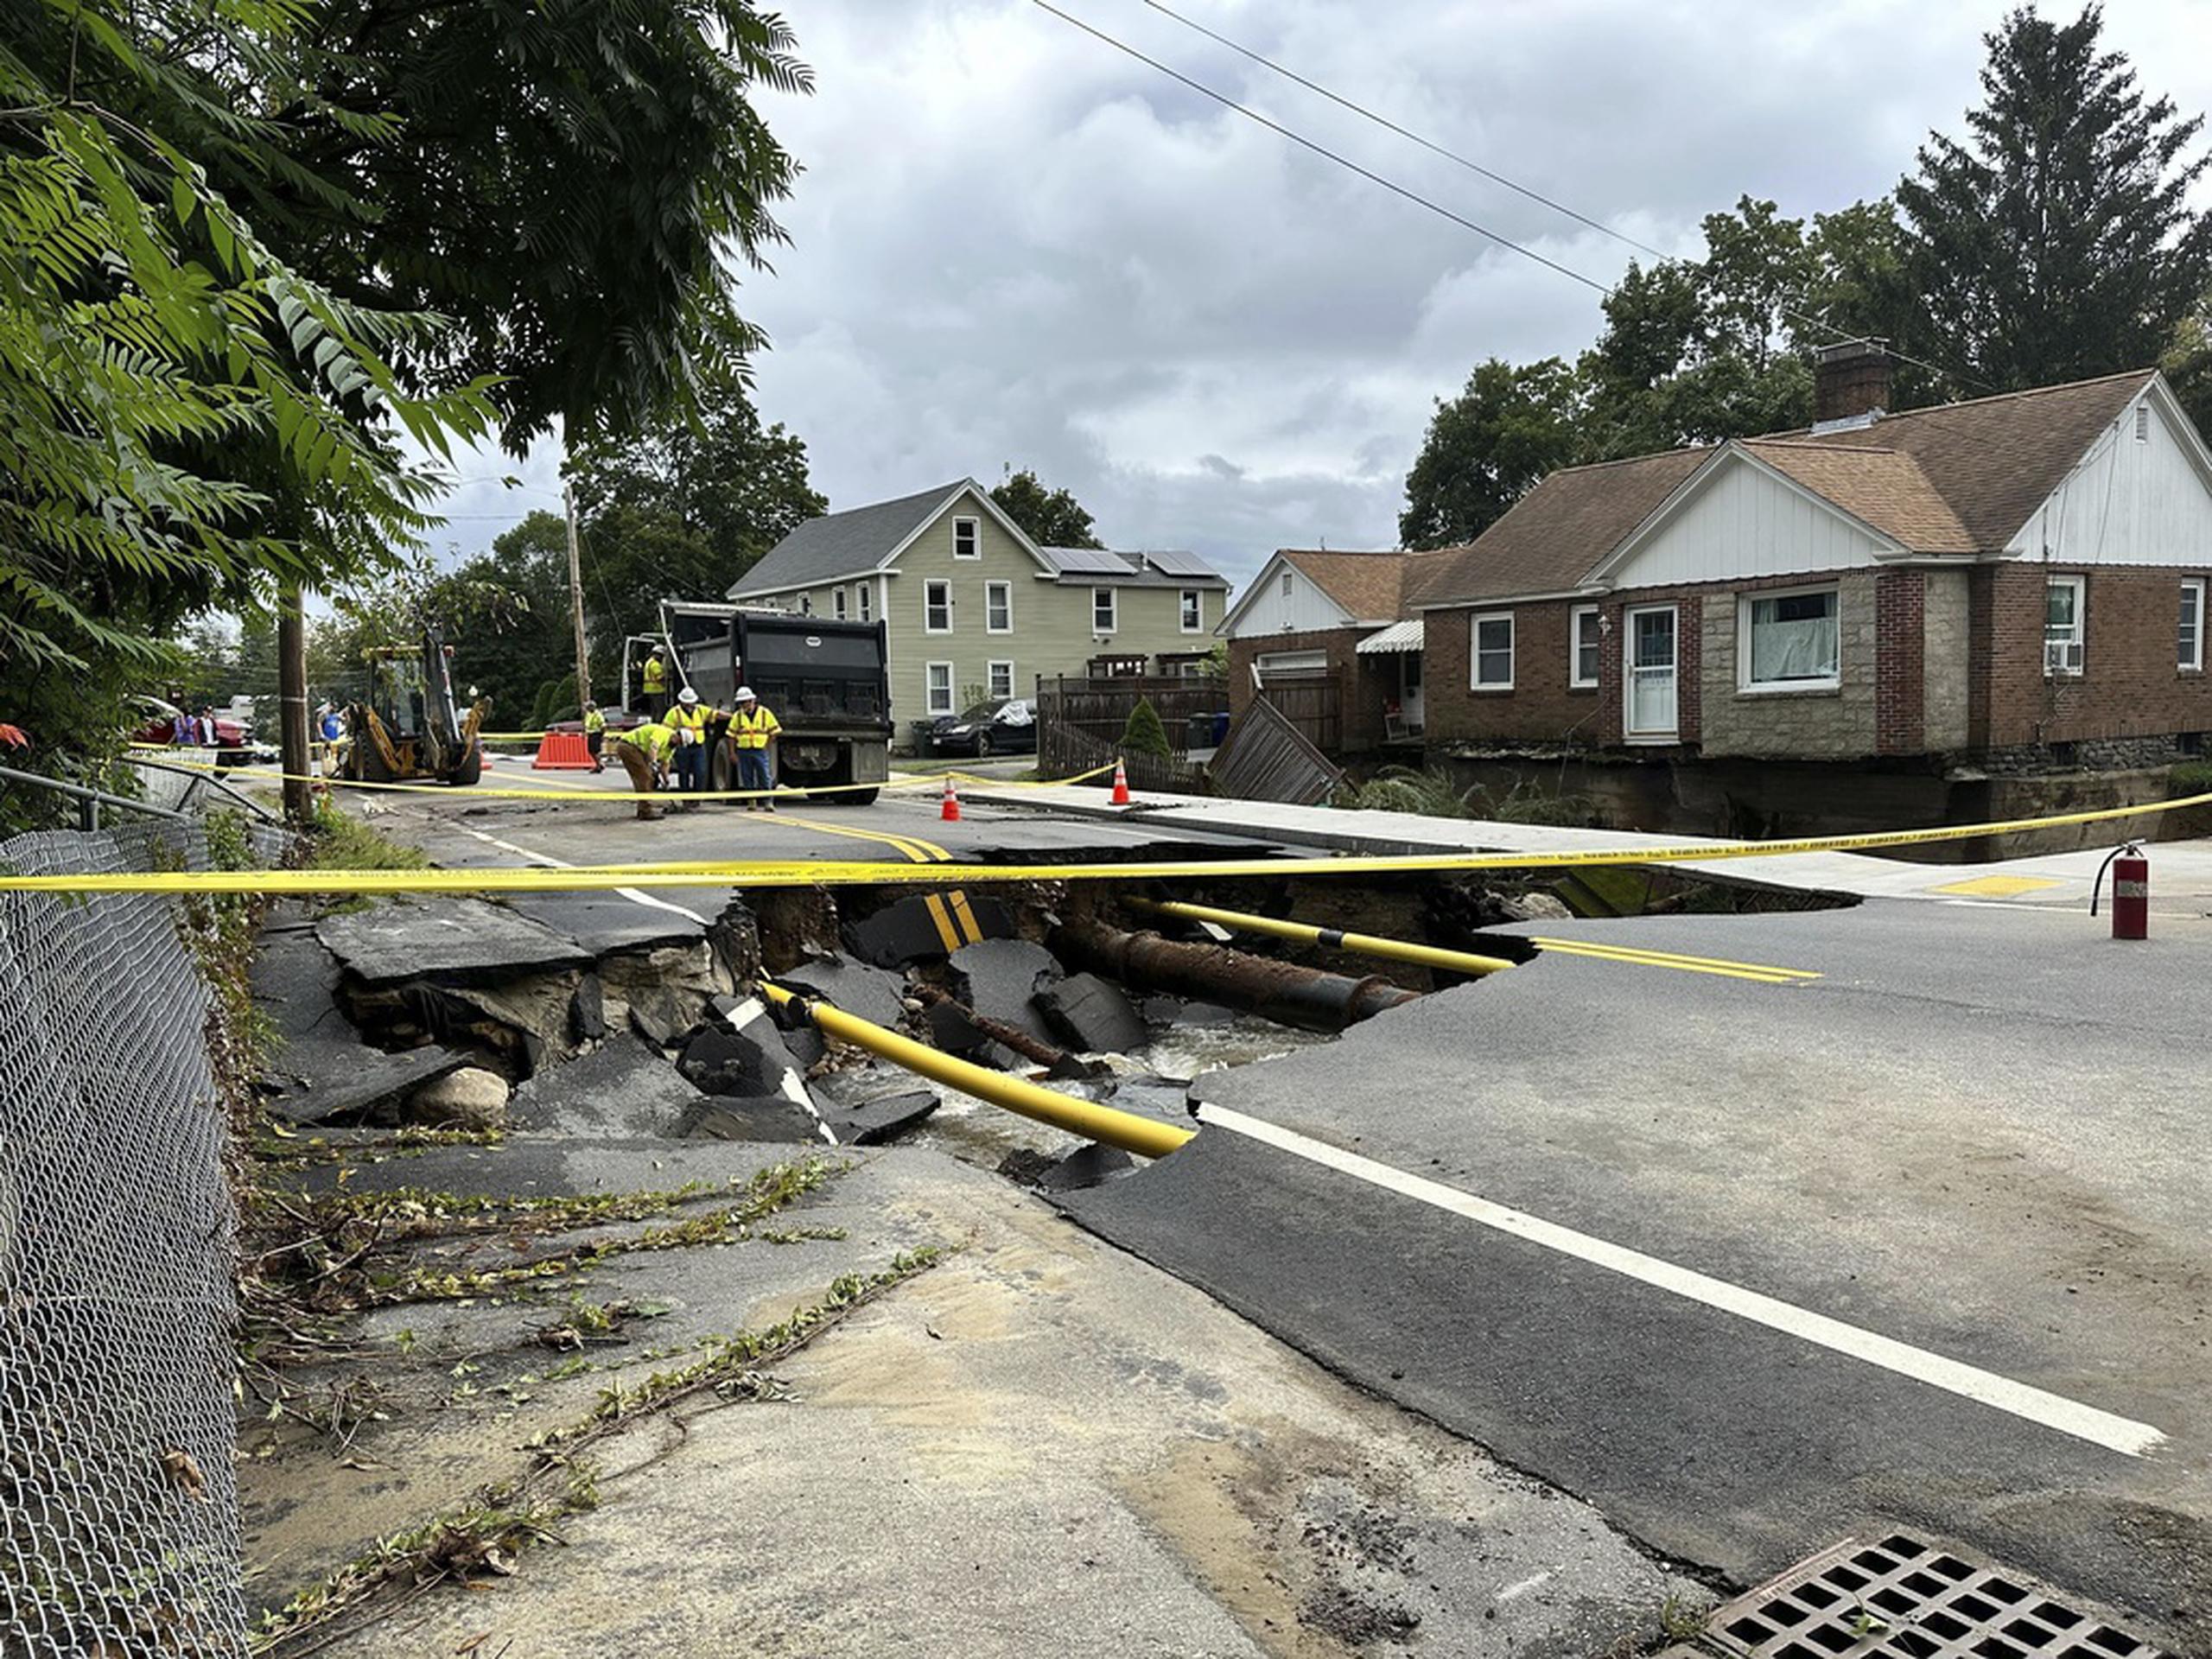 Personal de carreteras evaluaron un sumidero en Chestnut Street en Leominster, Massachusetts, el martes.